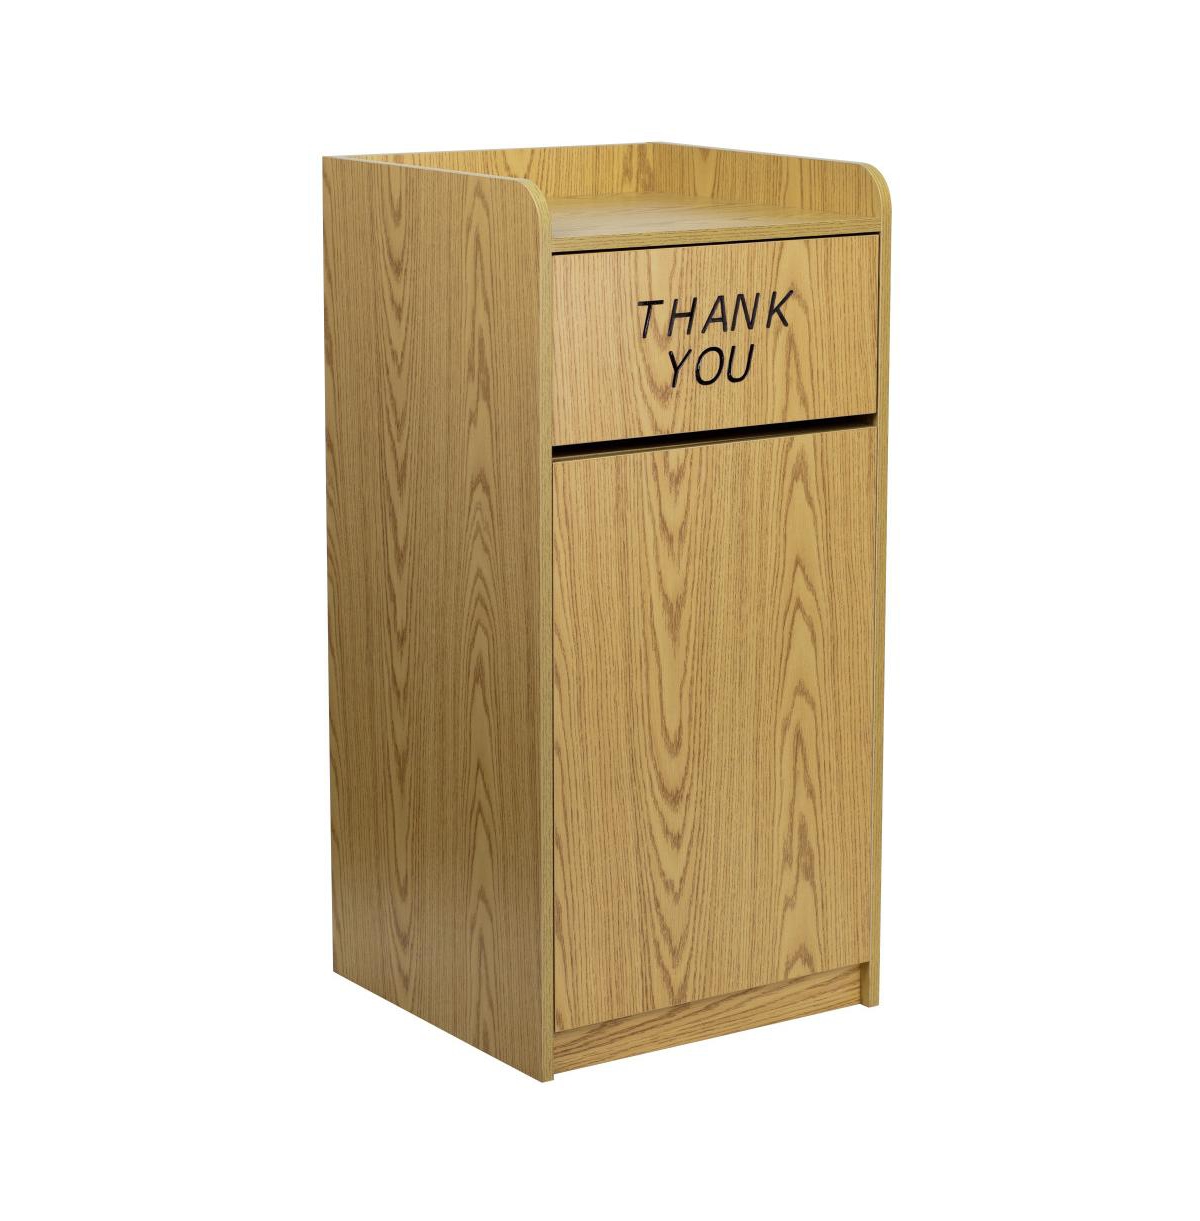 Wood Tray Top "Thank You" Restaurant Food Court Receptacle - Mahogany